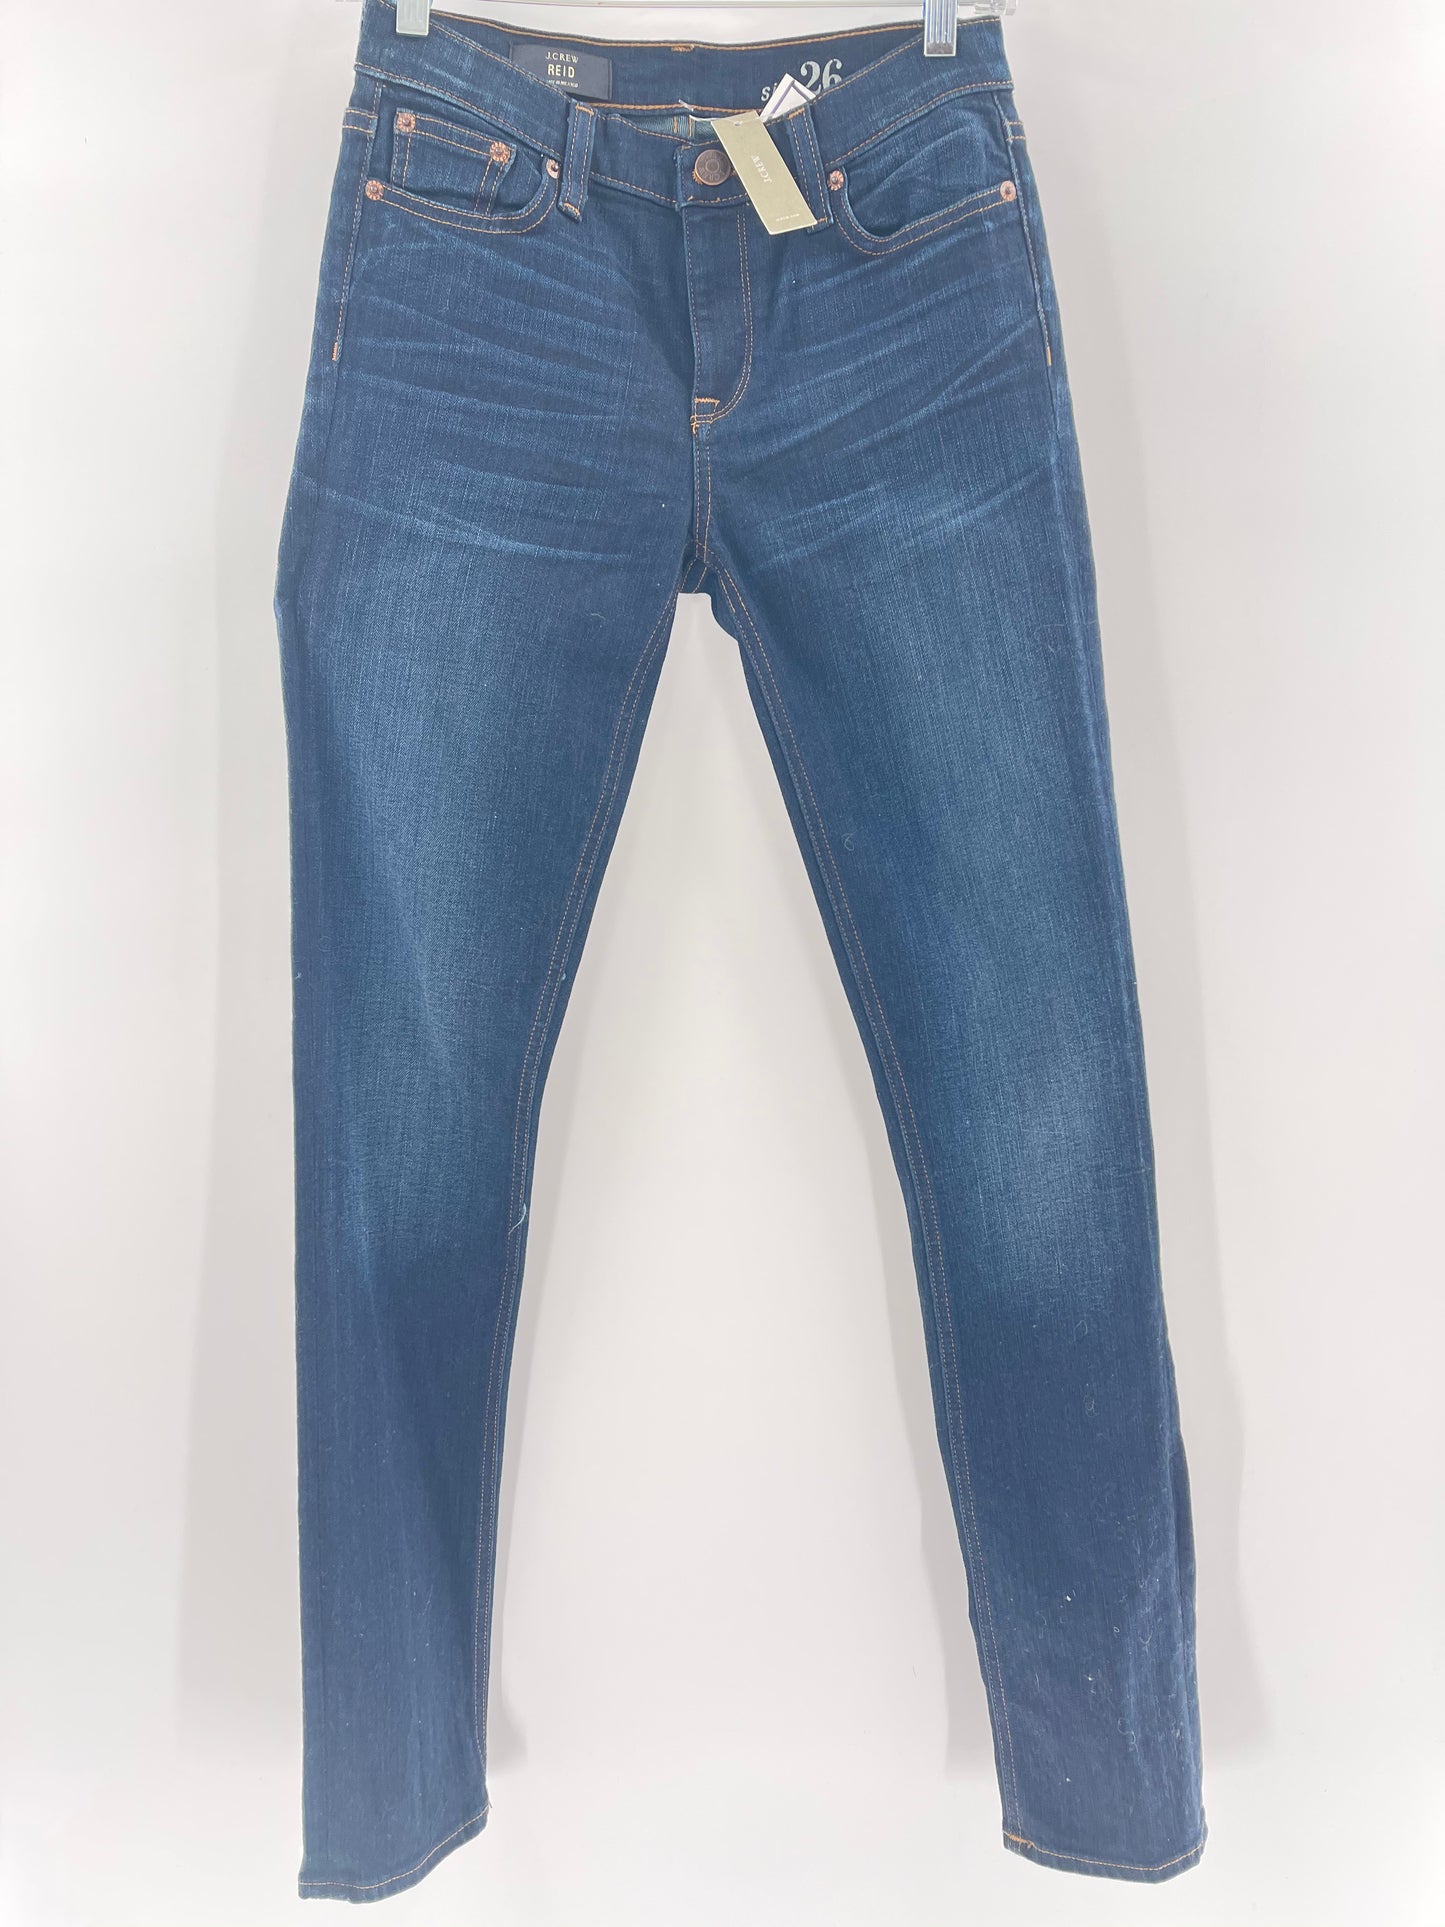 J Crew Reid Blue Jeans (Size 26)